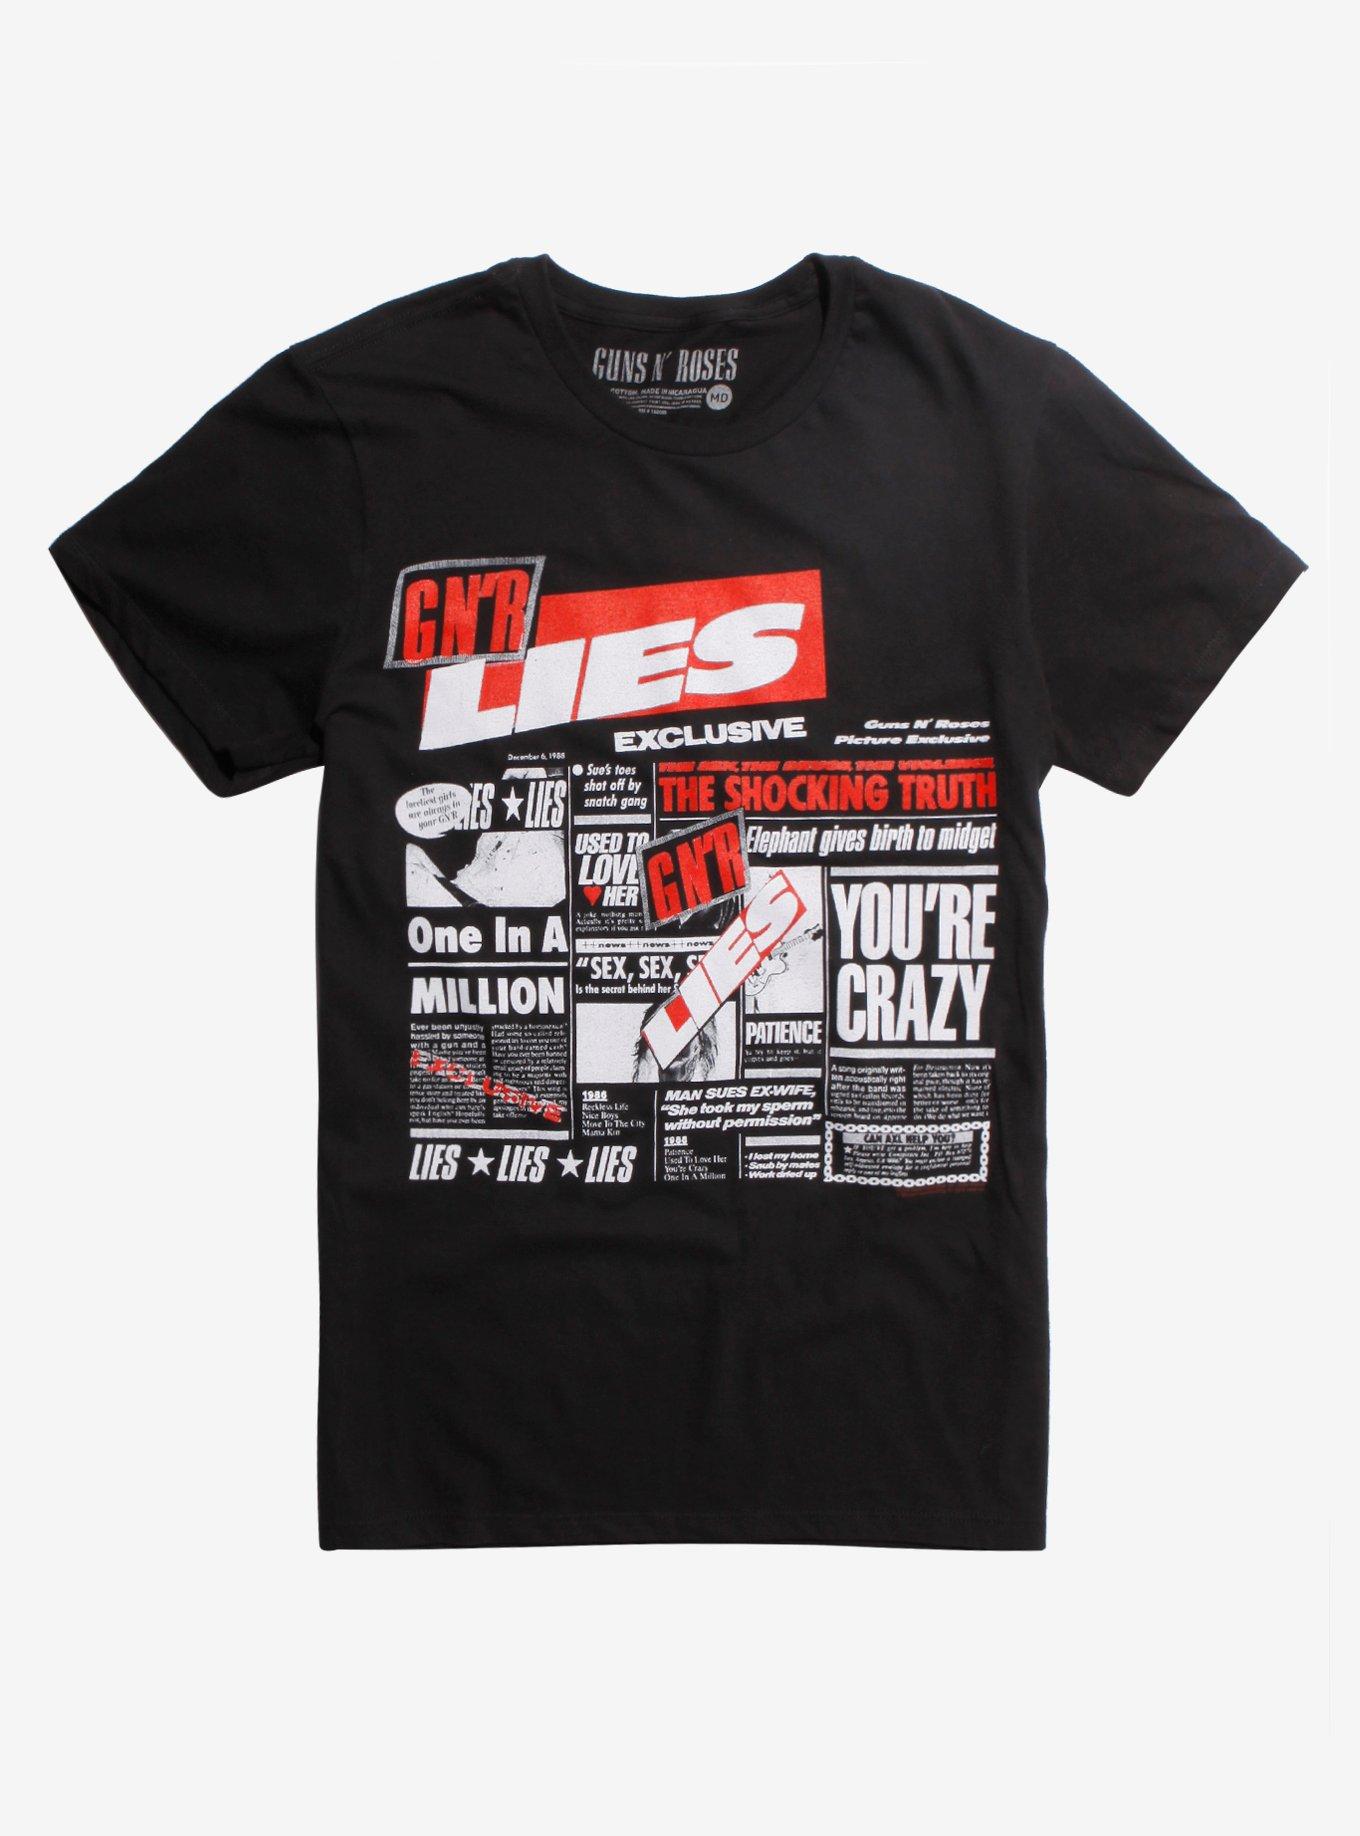 Guns N Roses Lies T-Shirt Hot Topic pic